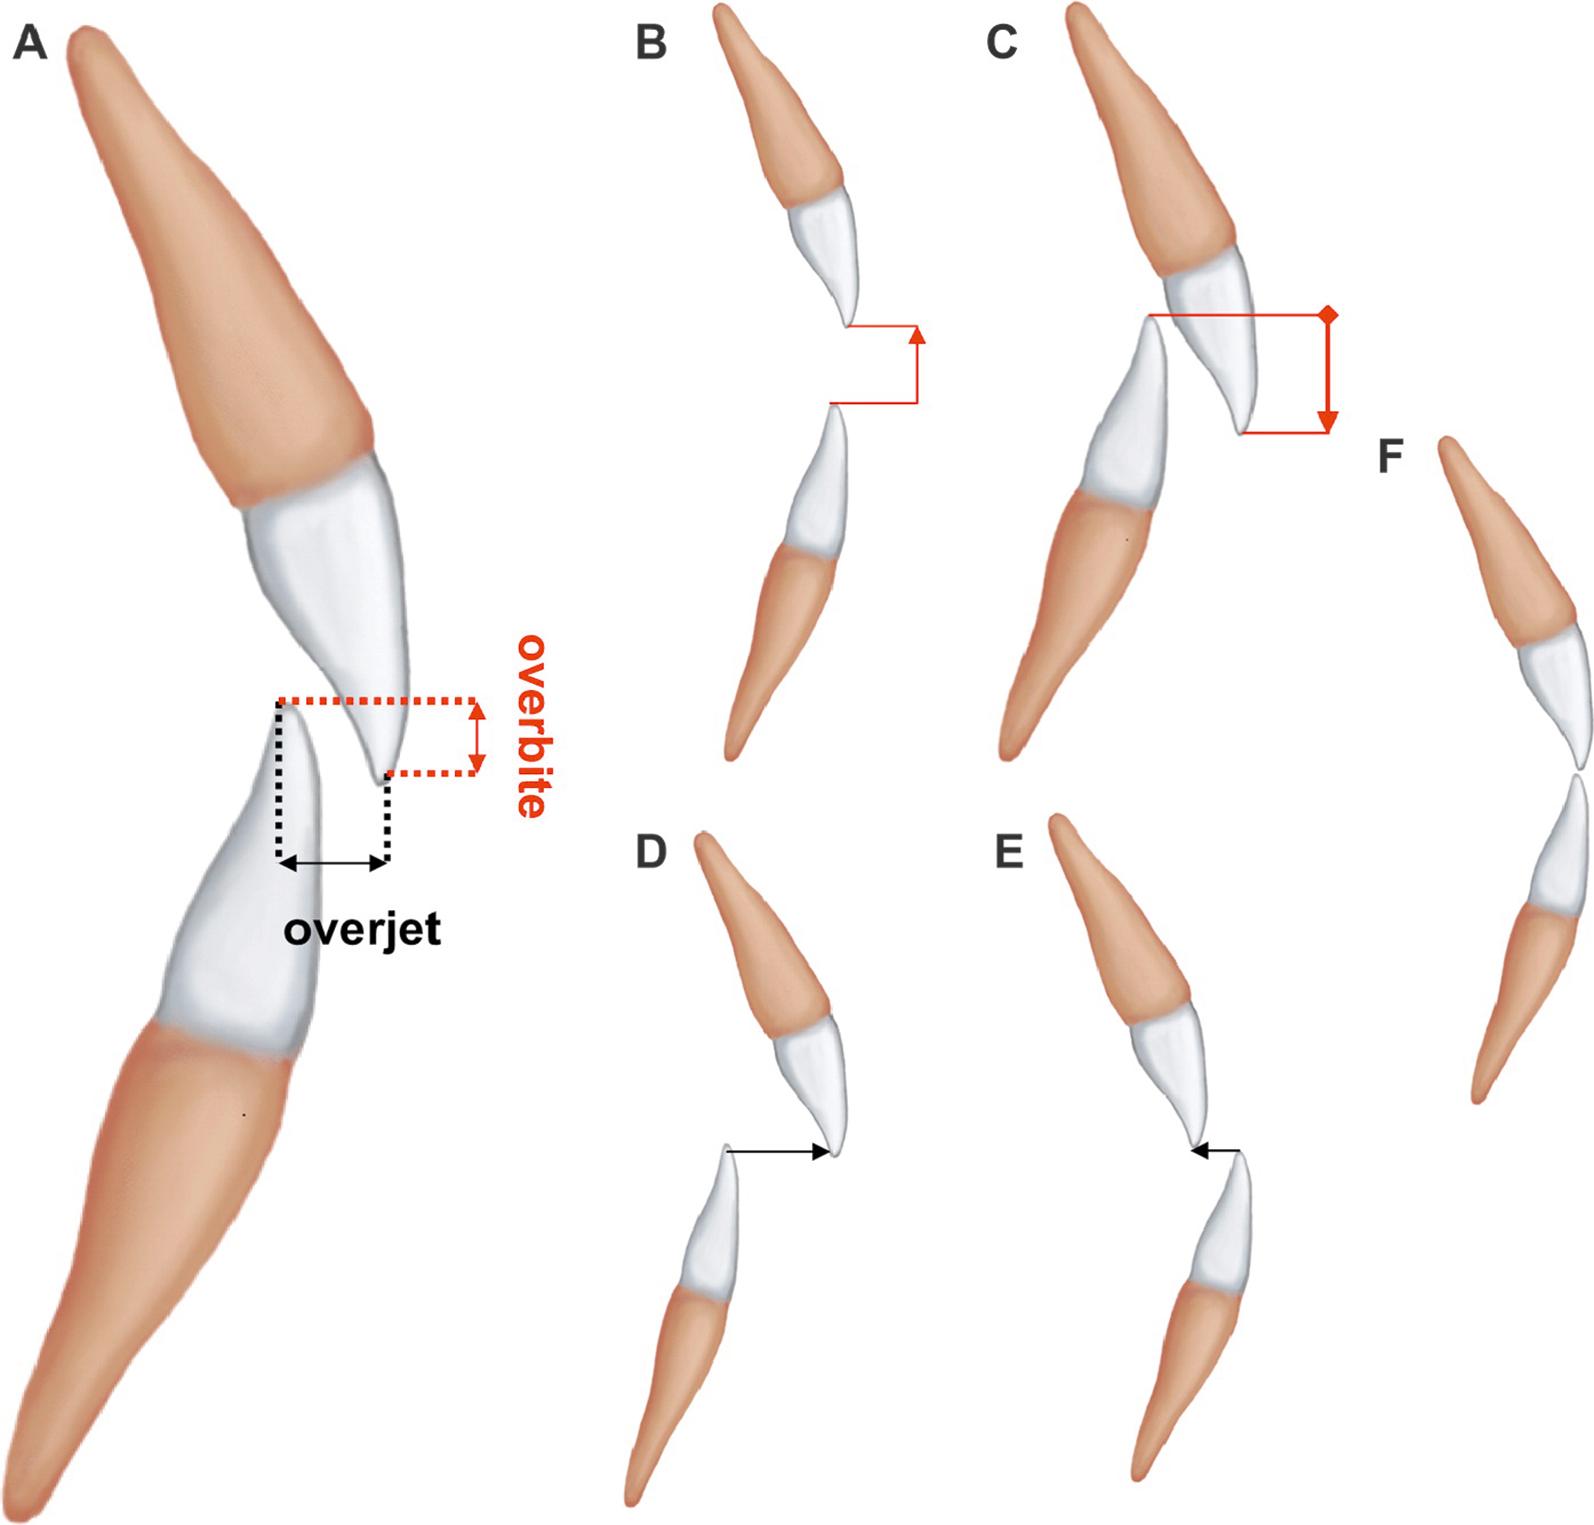 Fig. 21.3, Illustration of upper and lower incisor relationships. (A) Ideal overjet and overbite. (B) Open bite. (C) Deep bite. (D) Excessive overjet. (E) Reverse overjet or anterior crossbite or negative overjet. (F) Edge-to-edge relationship.